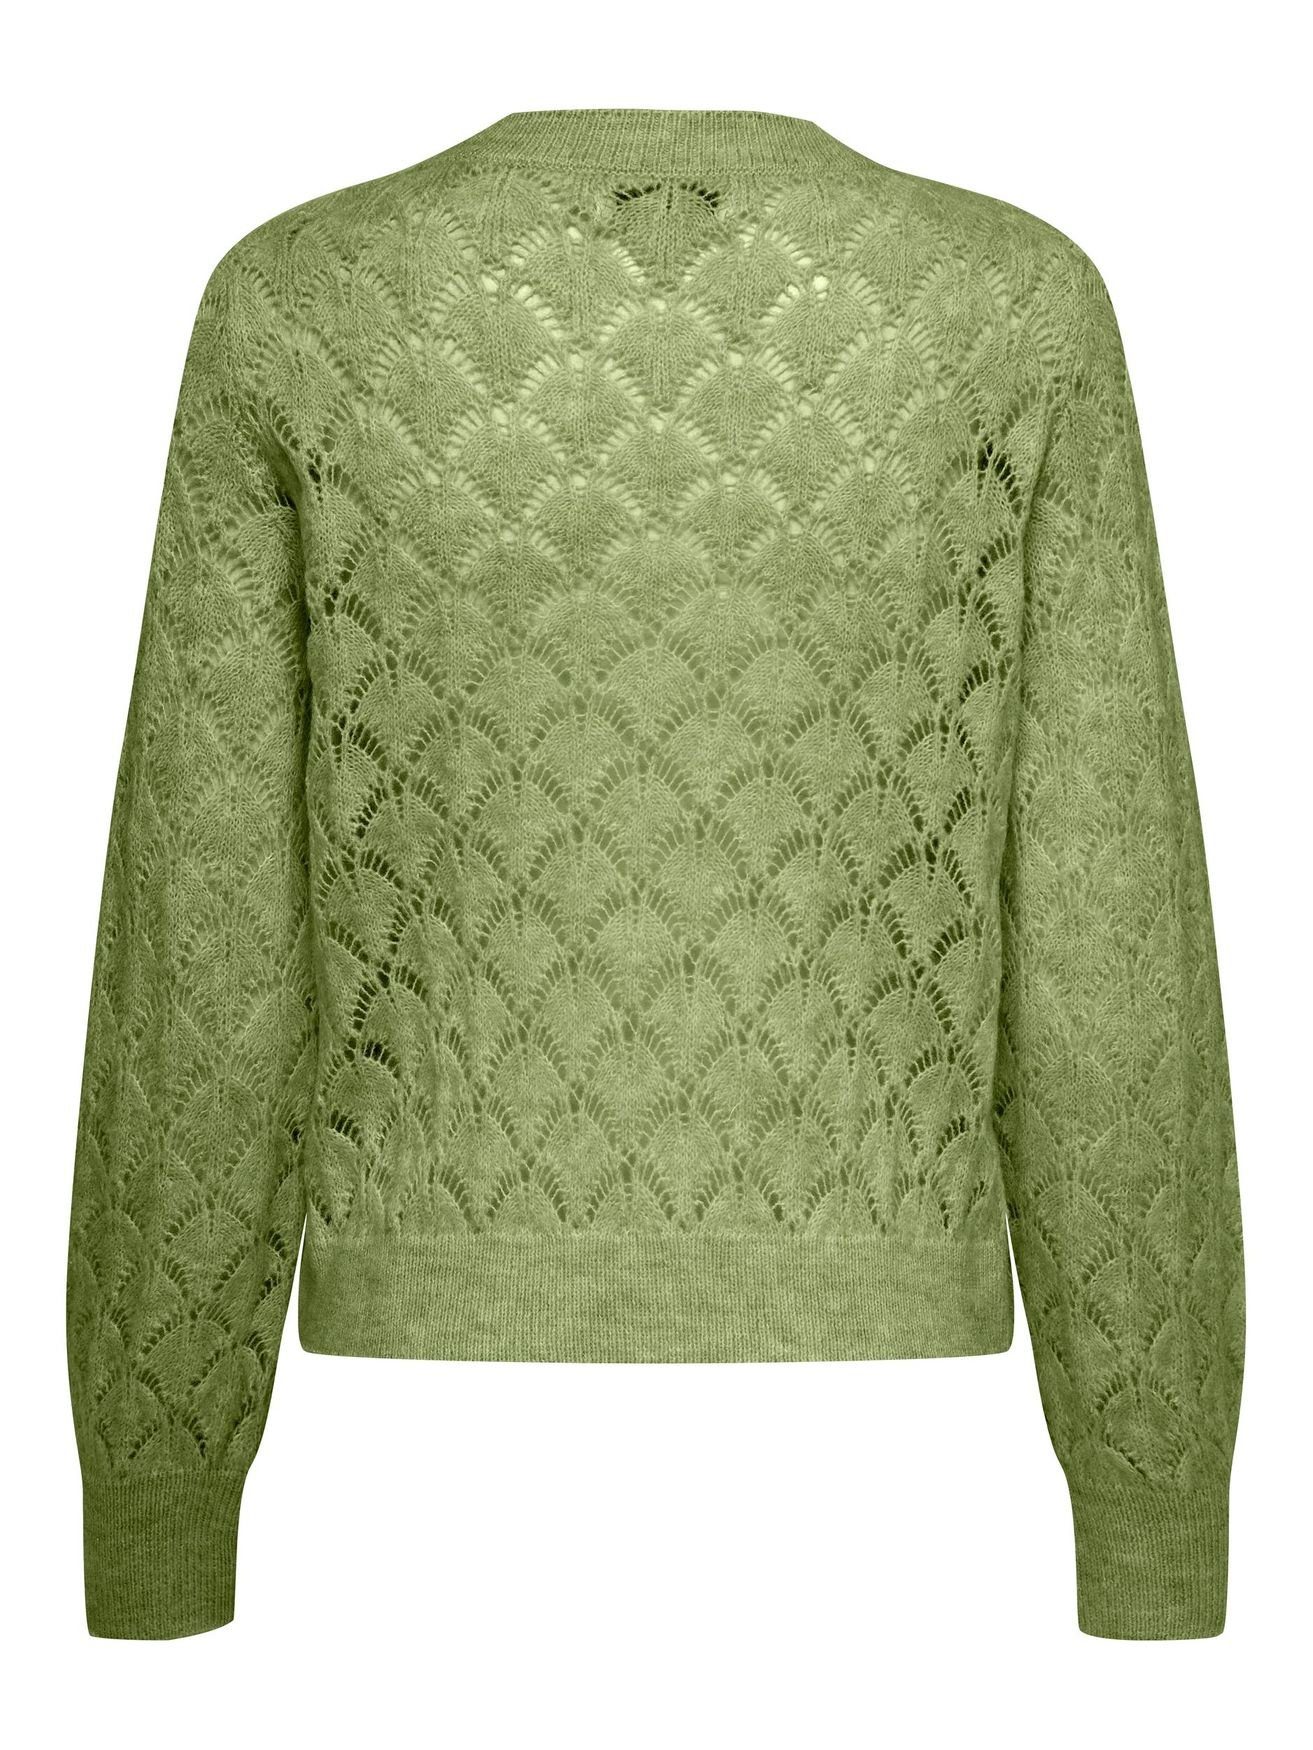 JDYLETTY Sweater 4588 Strick JACQUELINE in Grün de YONG Struktur Strickpullover Pullover Stretch Dünner Langarm